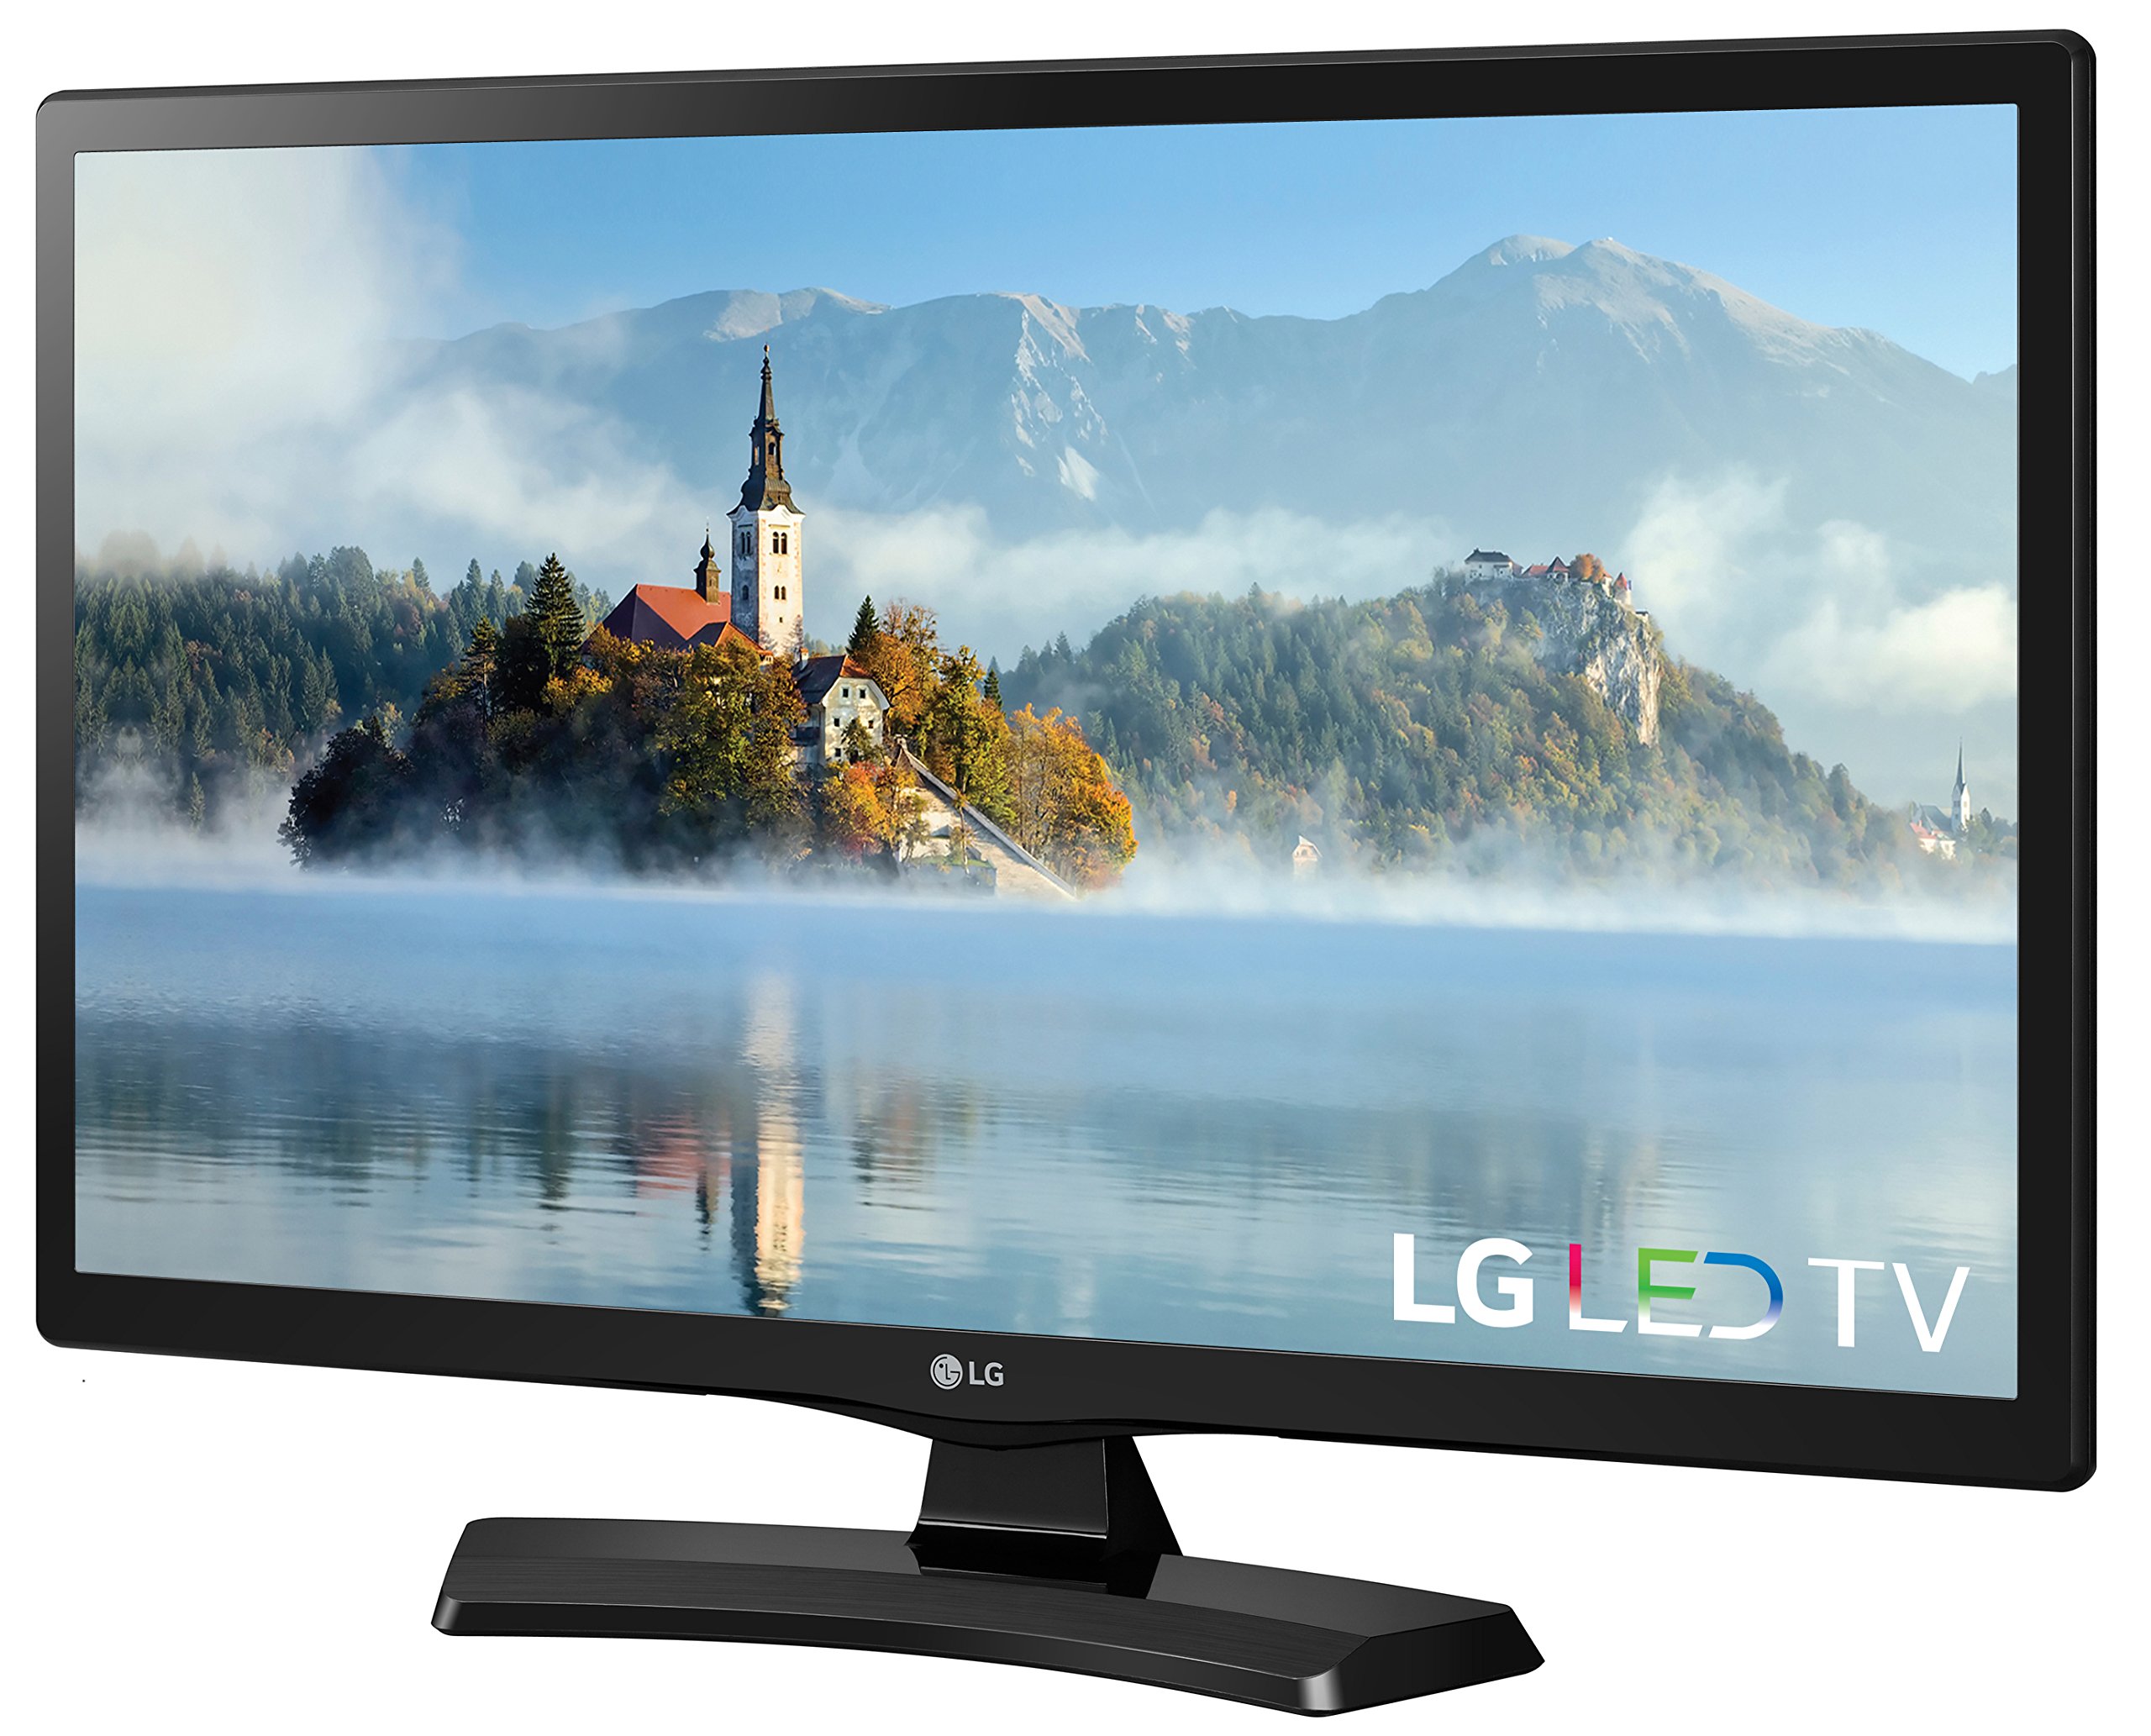 LG LCD TV 24